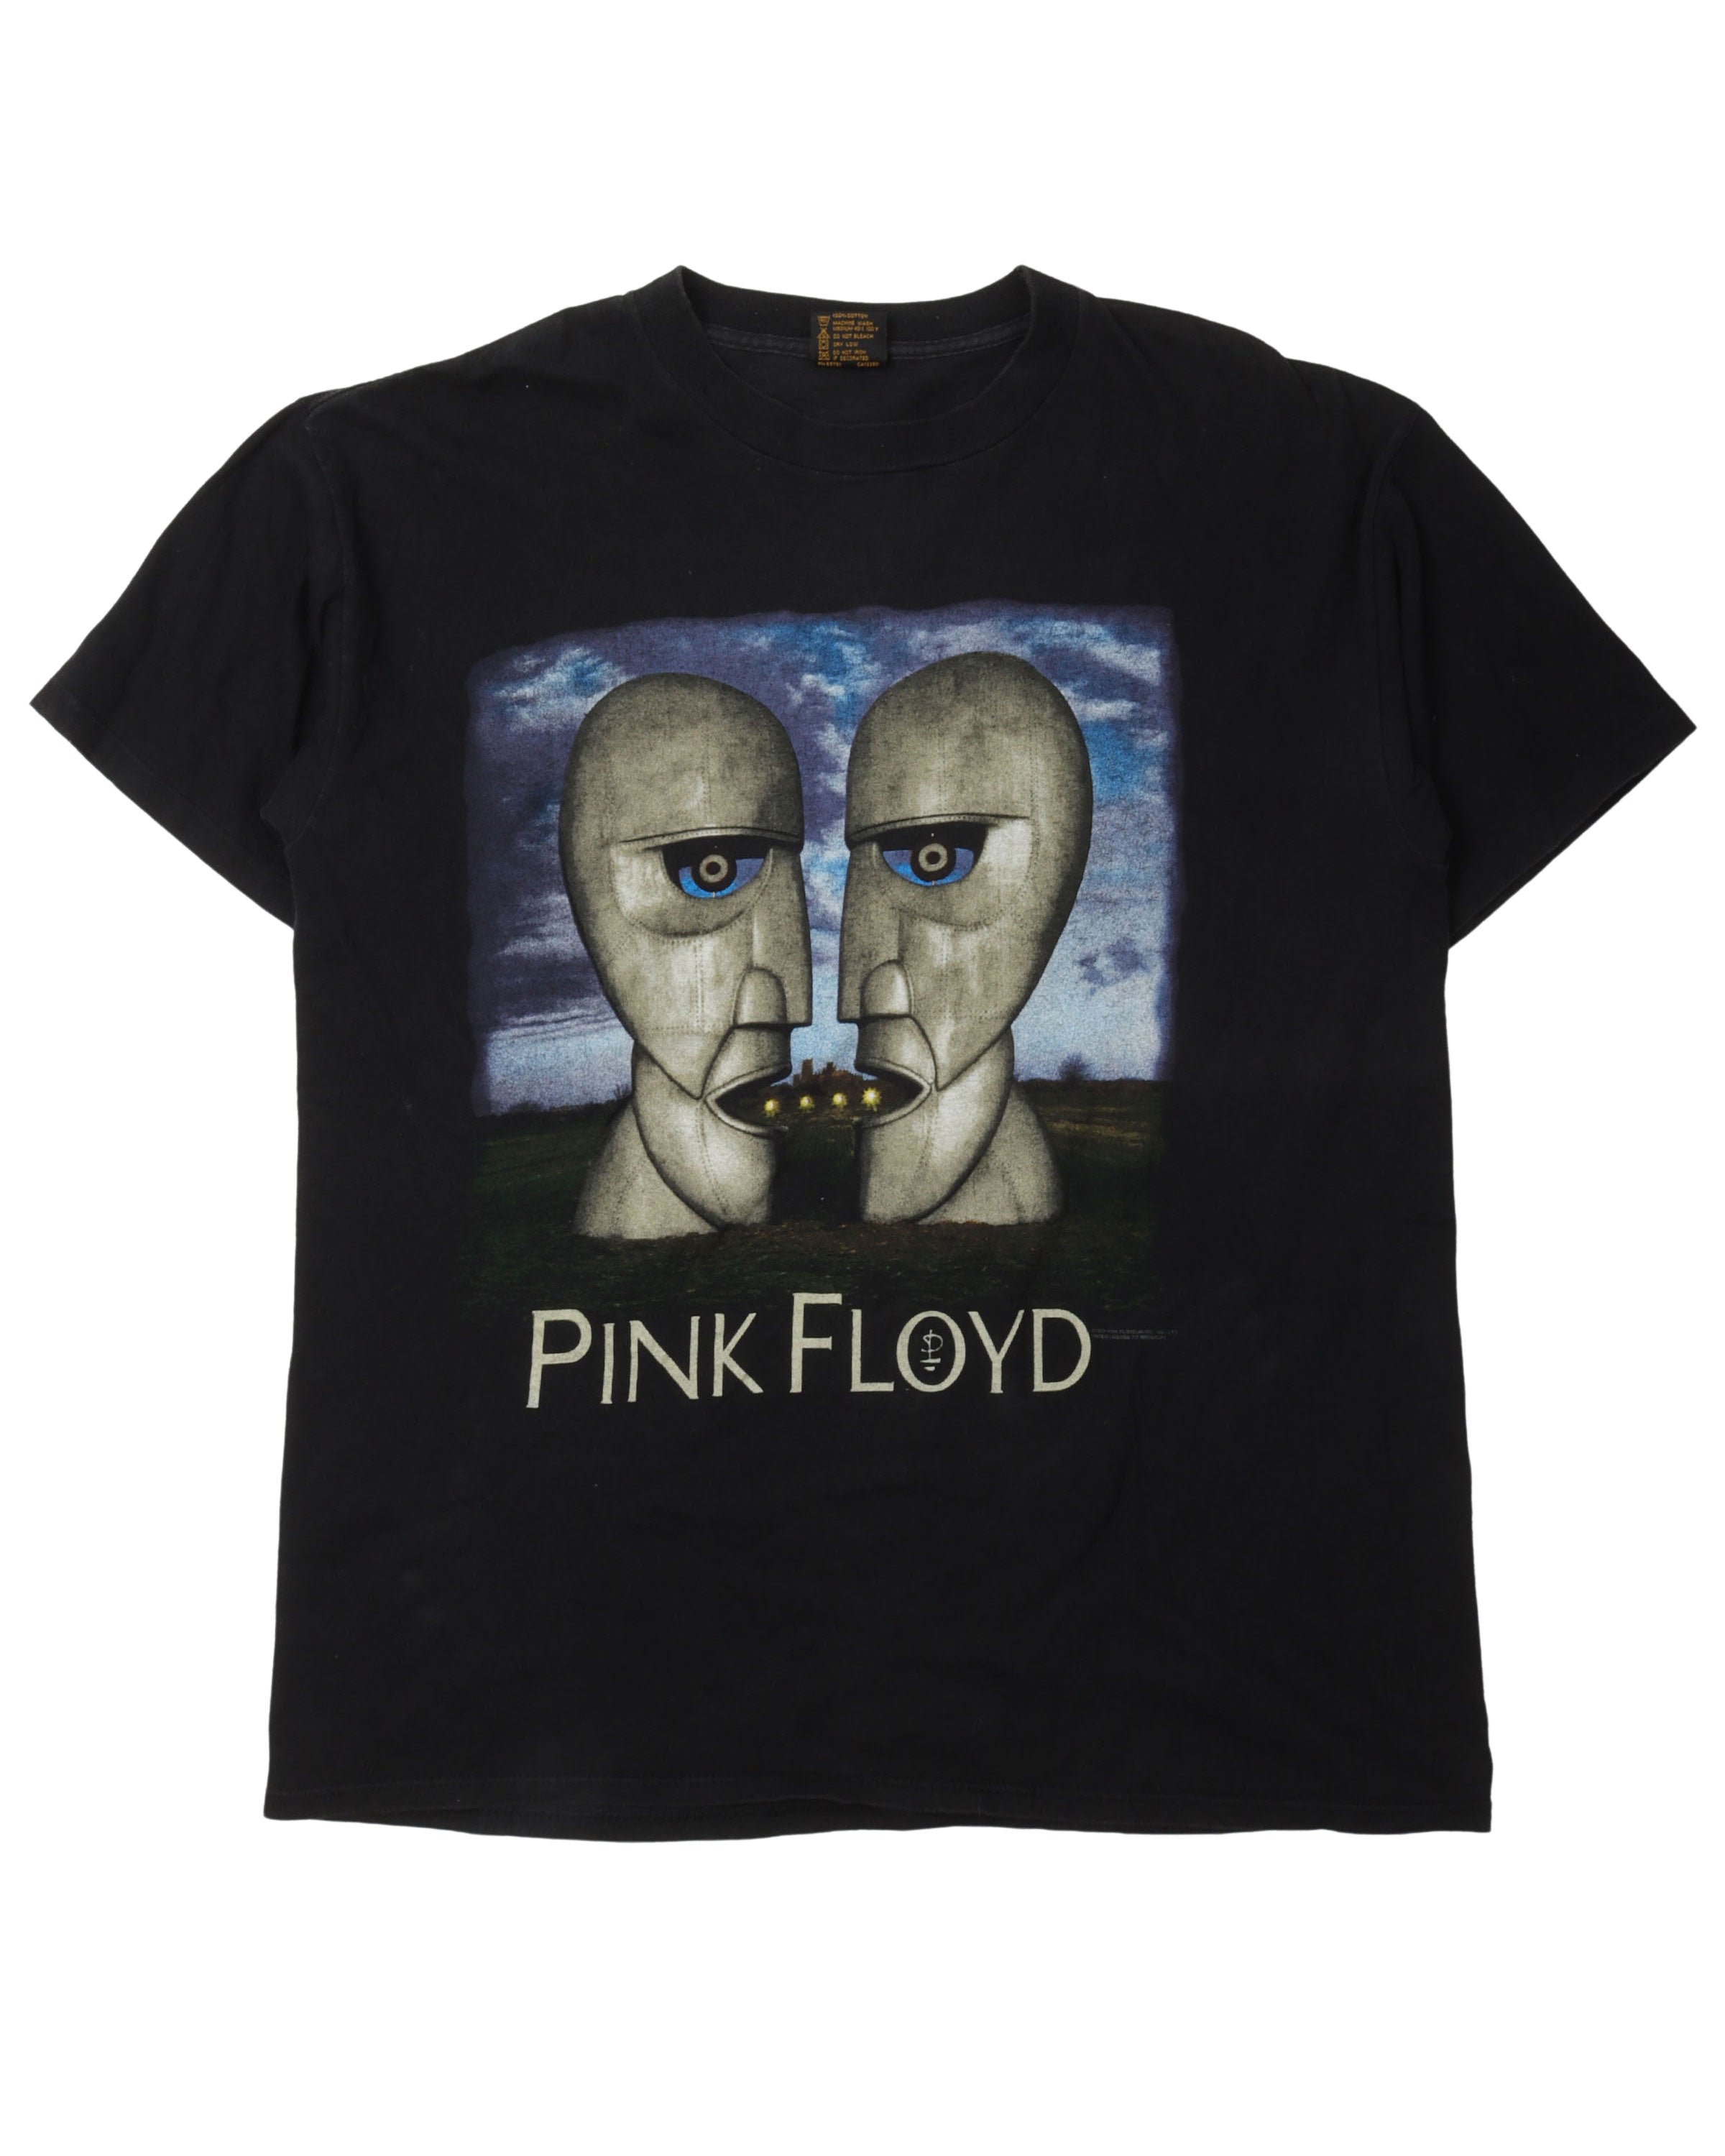 Pink Floyd 1994 Tour T-Shirt